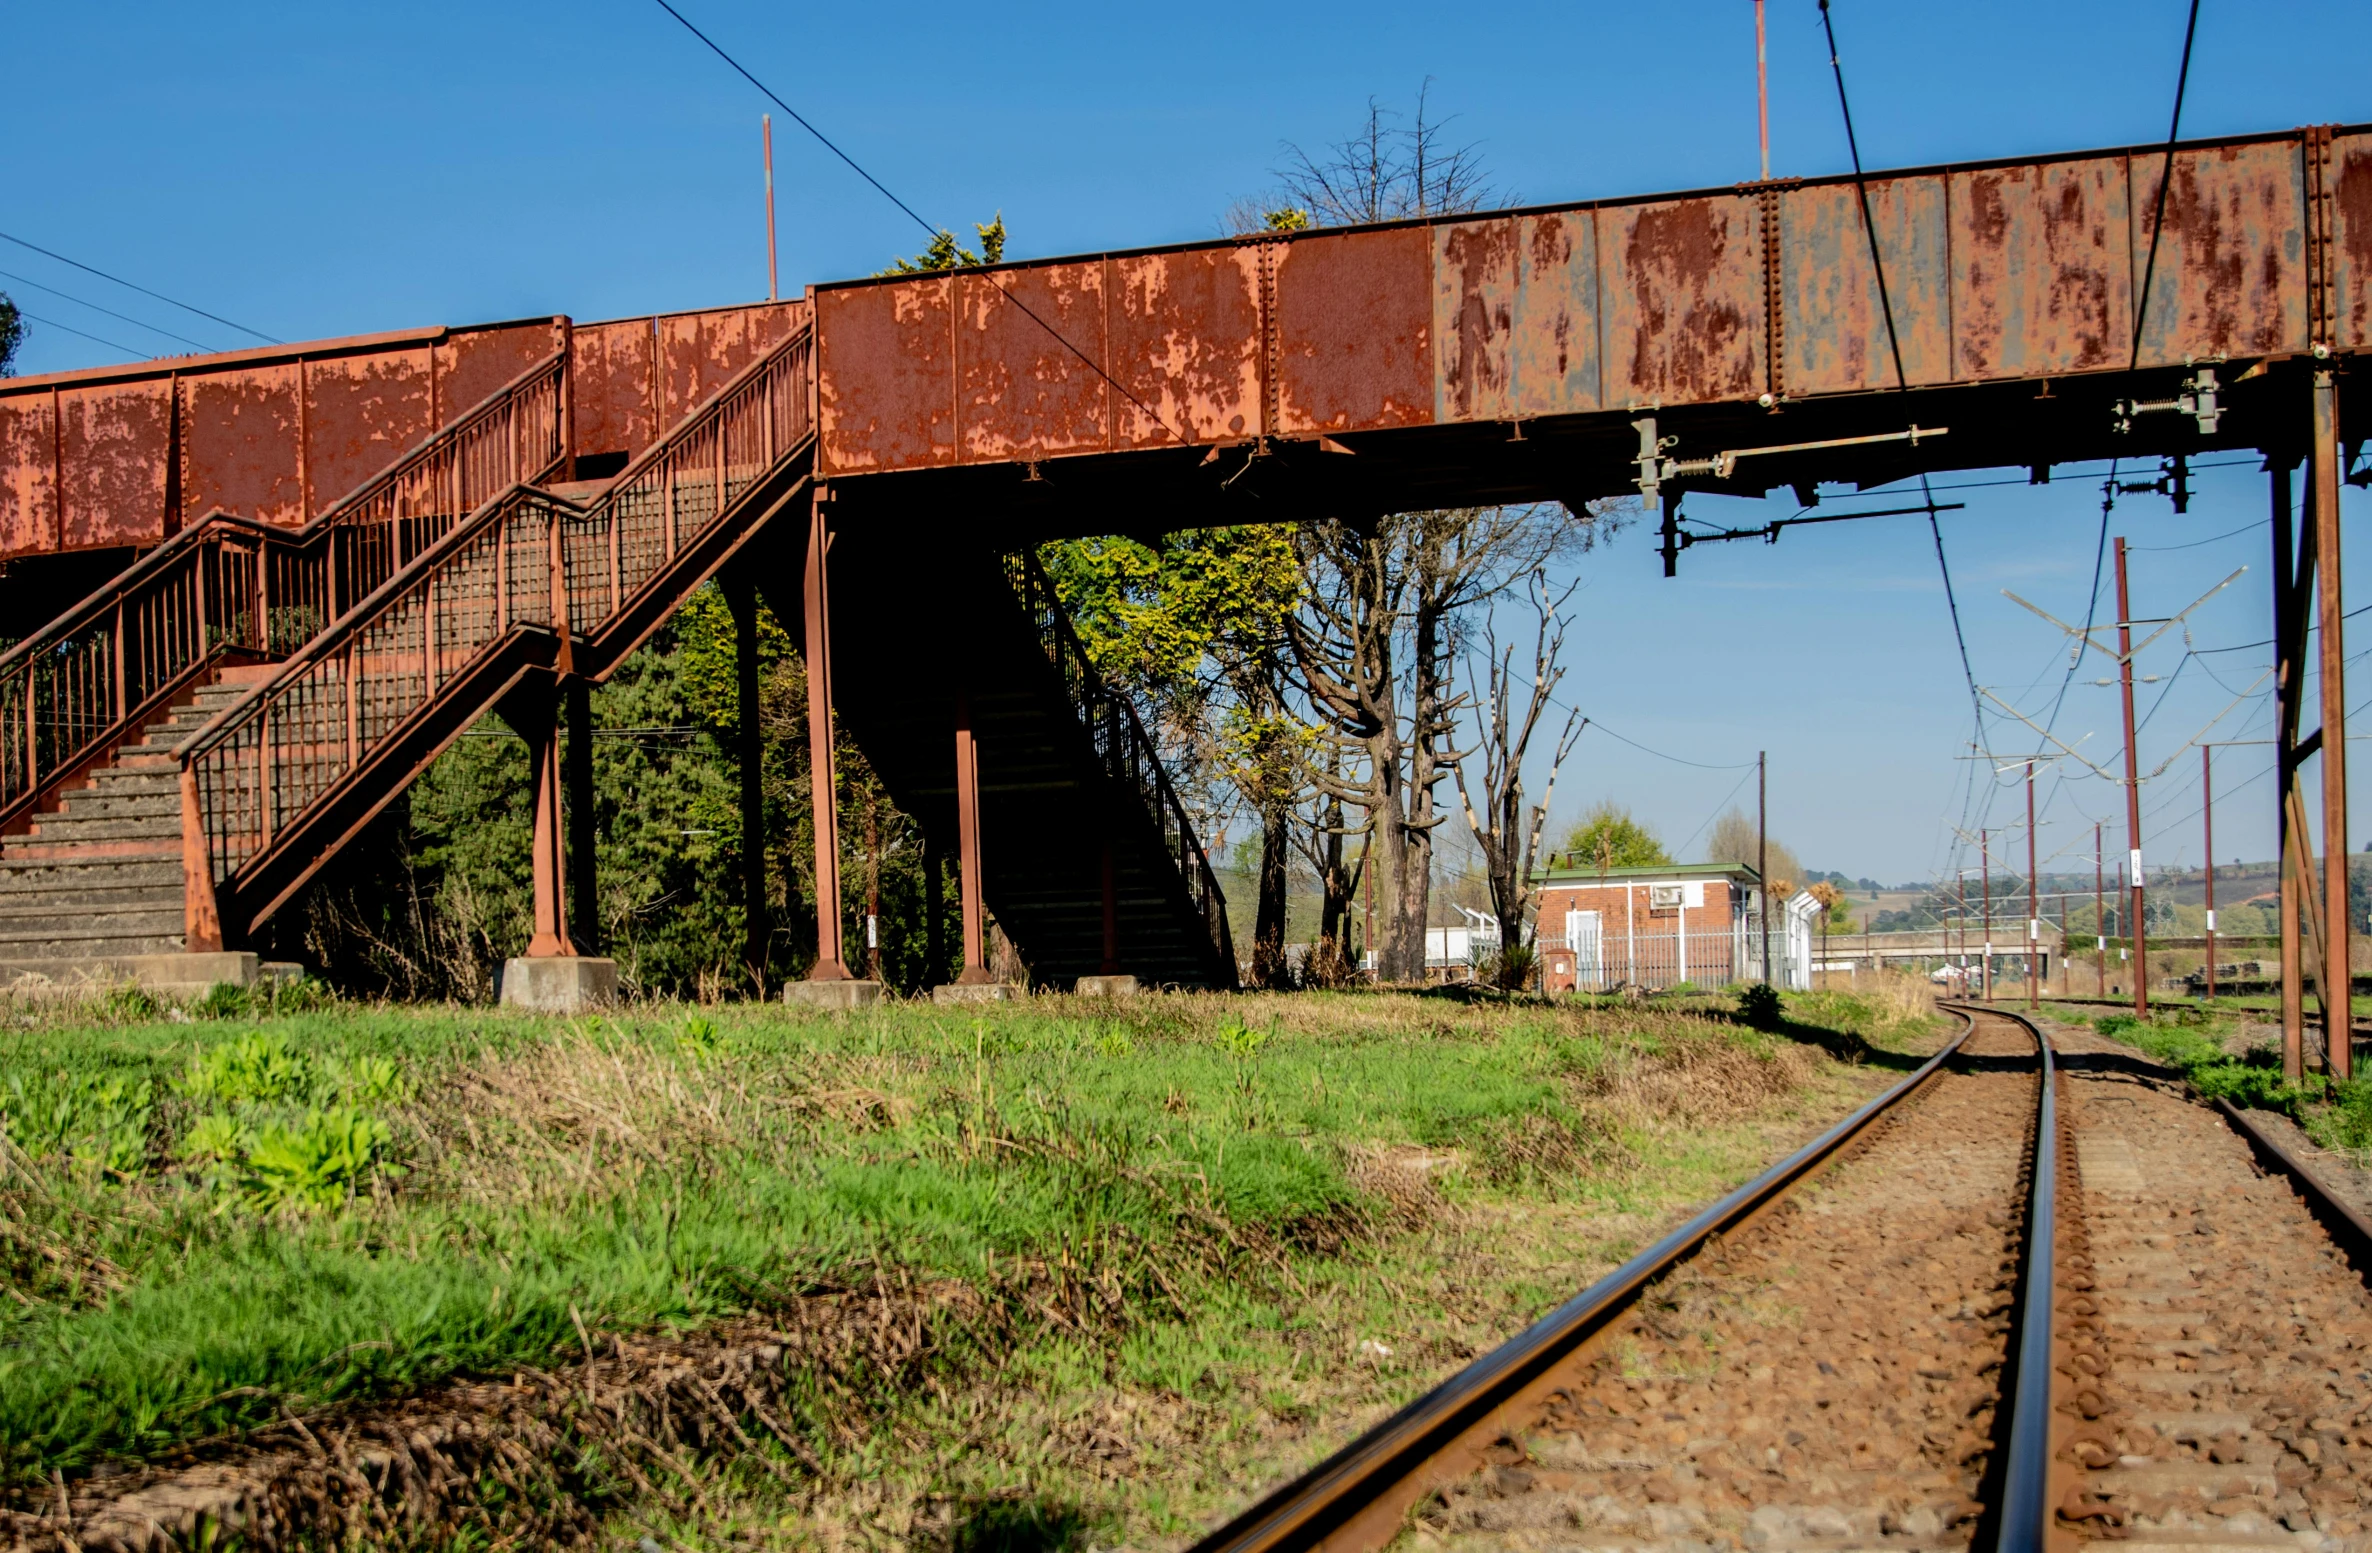 a close up of a train track near a bridge, renaissance, southern slav features, exterior photo, ((rust)), panorama